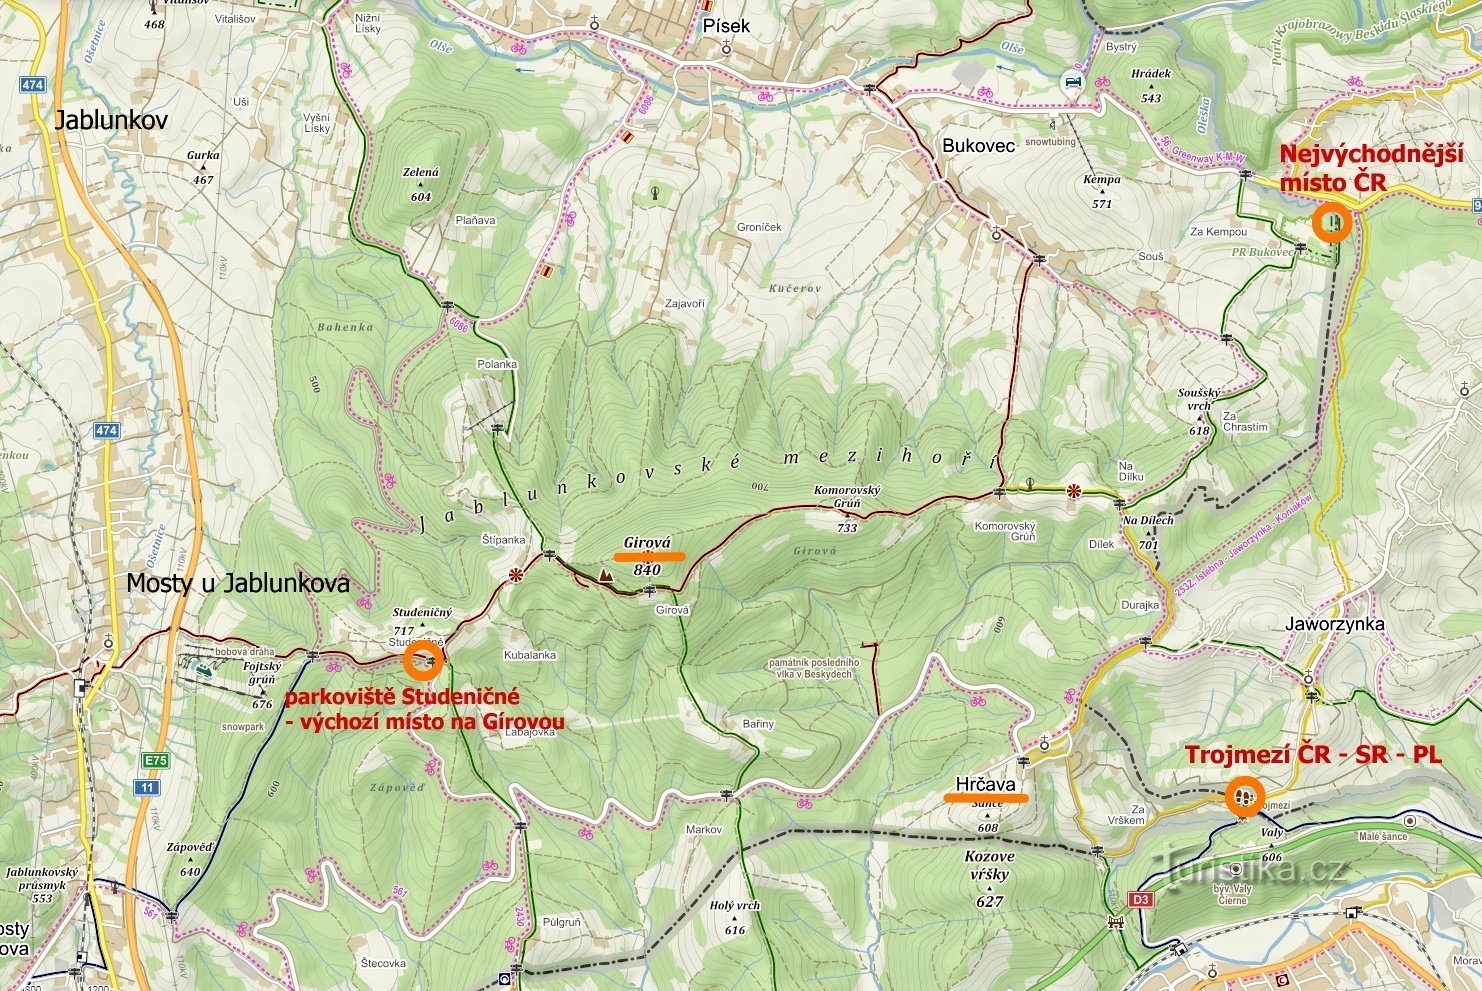 kort over besøgte steder: Tjekkiets østligste punkt, Hrčava - Trojmezí, Jablunkovské m